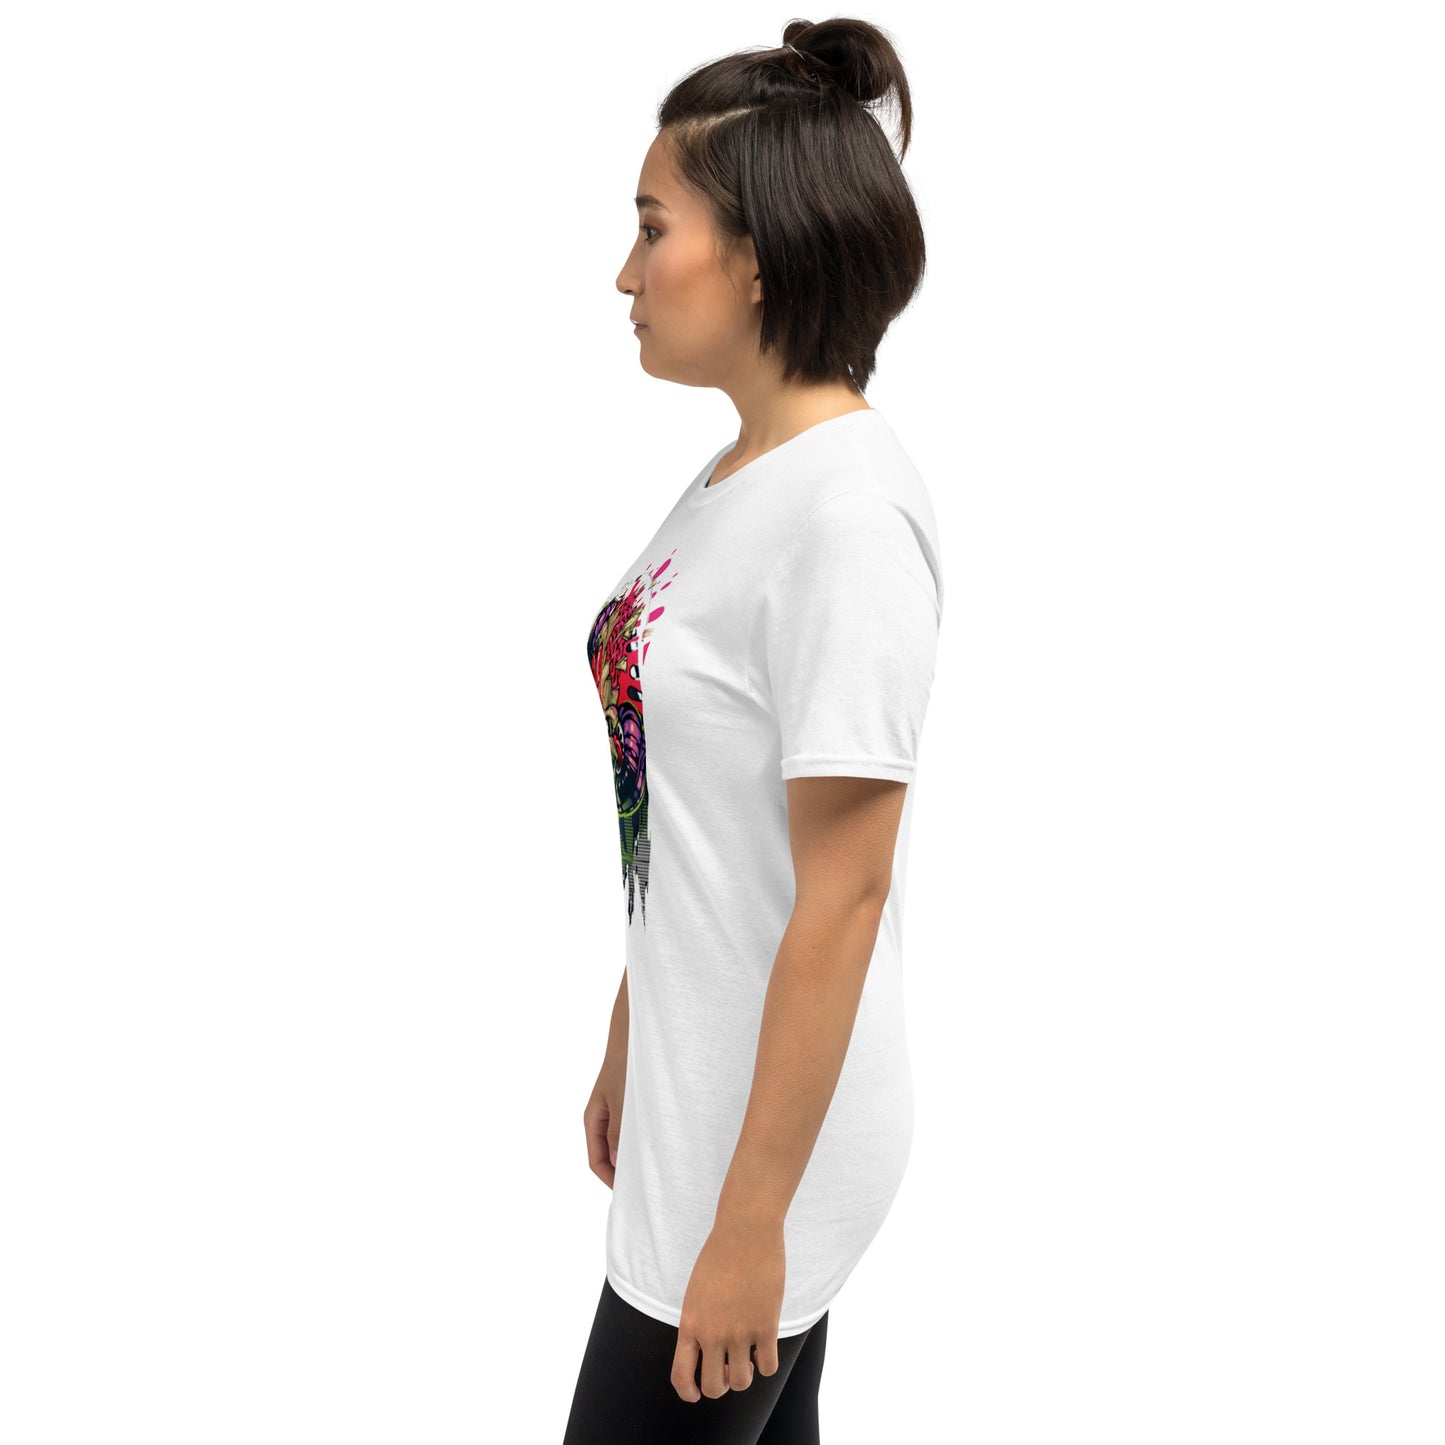 VOODOO MACHINE CO. Short-Sleeve Unisex T-Shirt